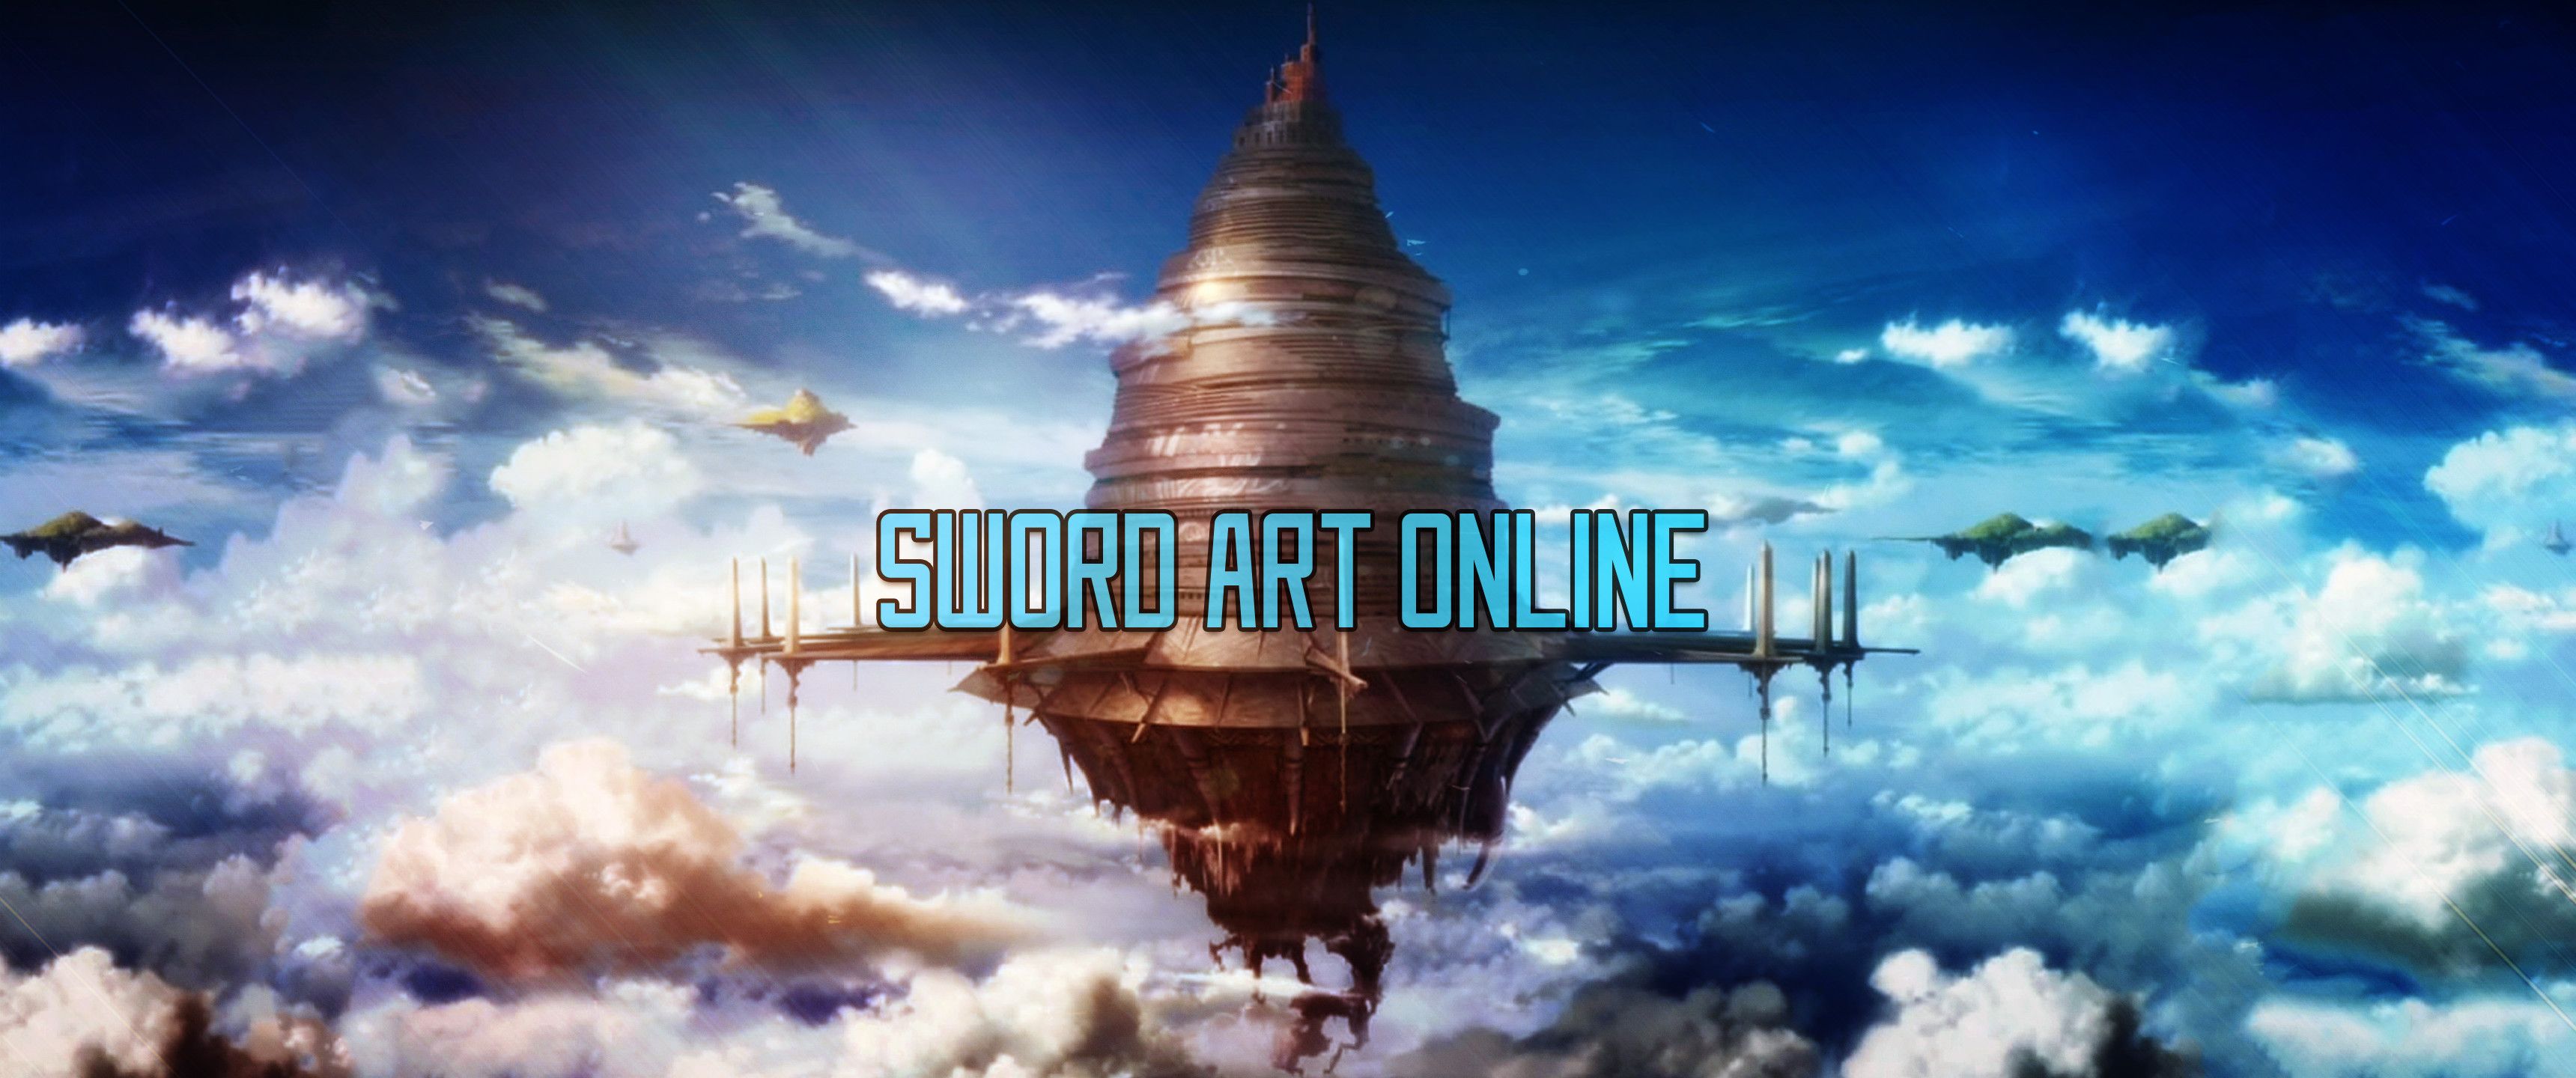 Aincrad Landscape Sword Art Online HD Wallpaper